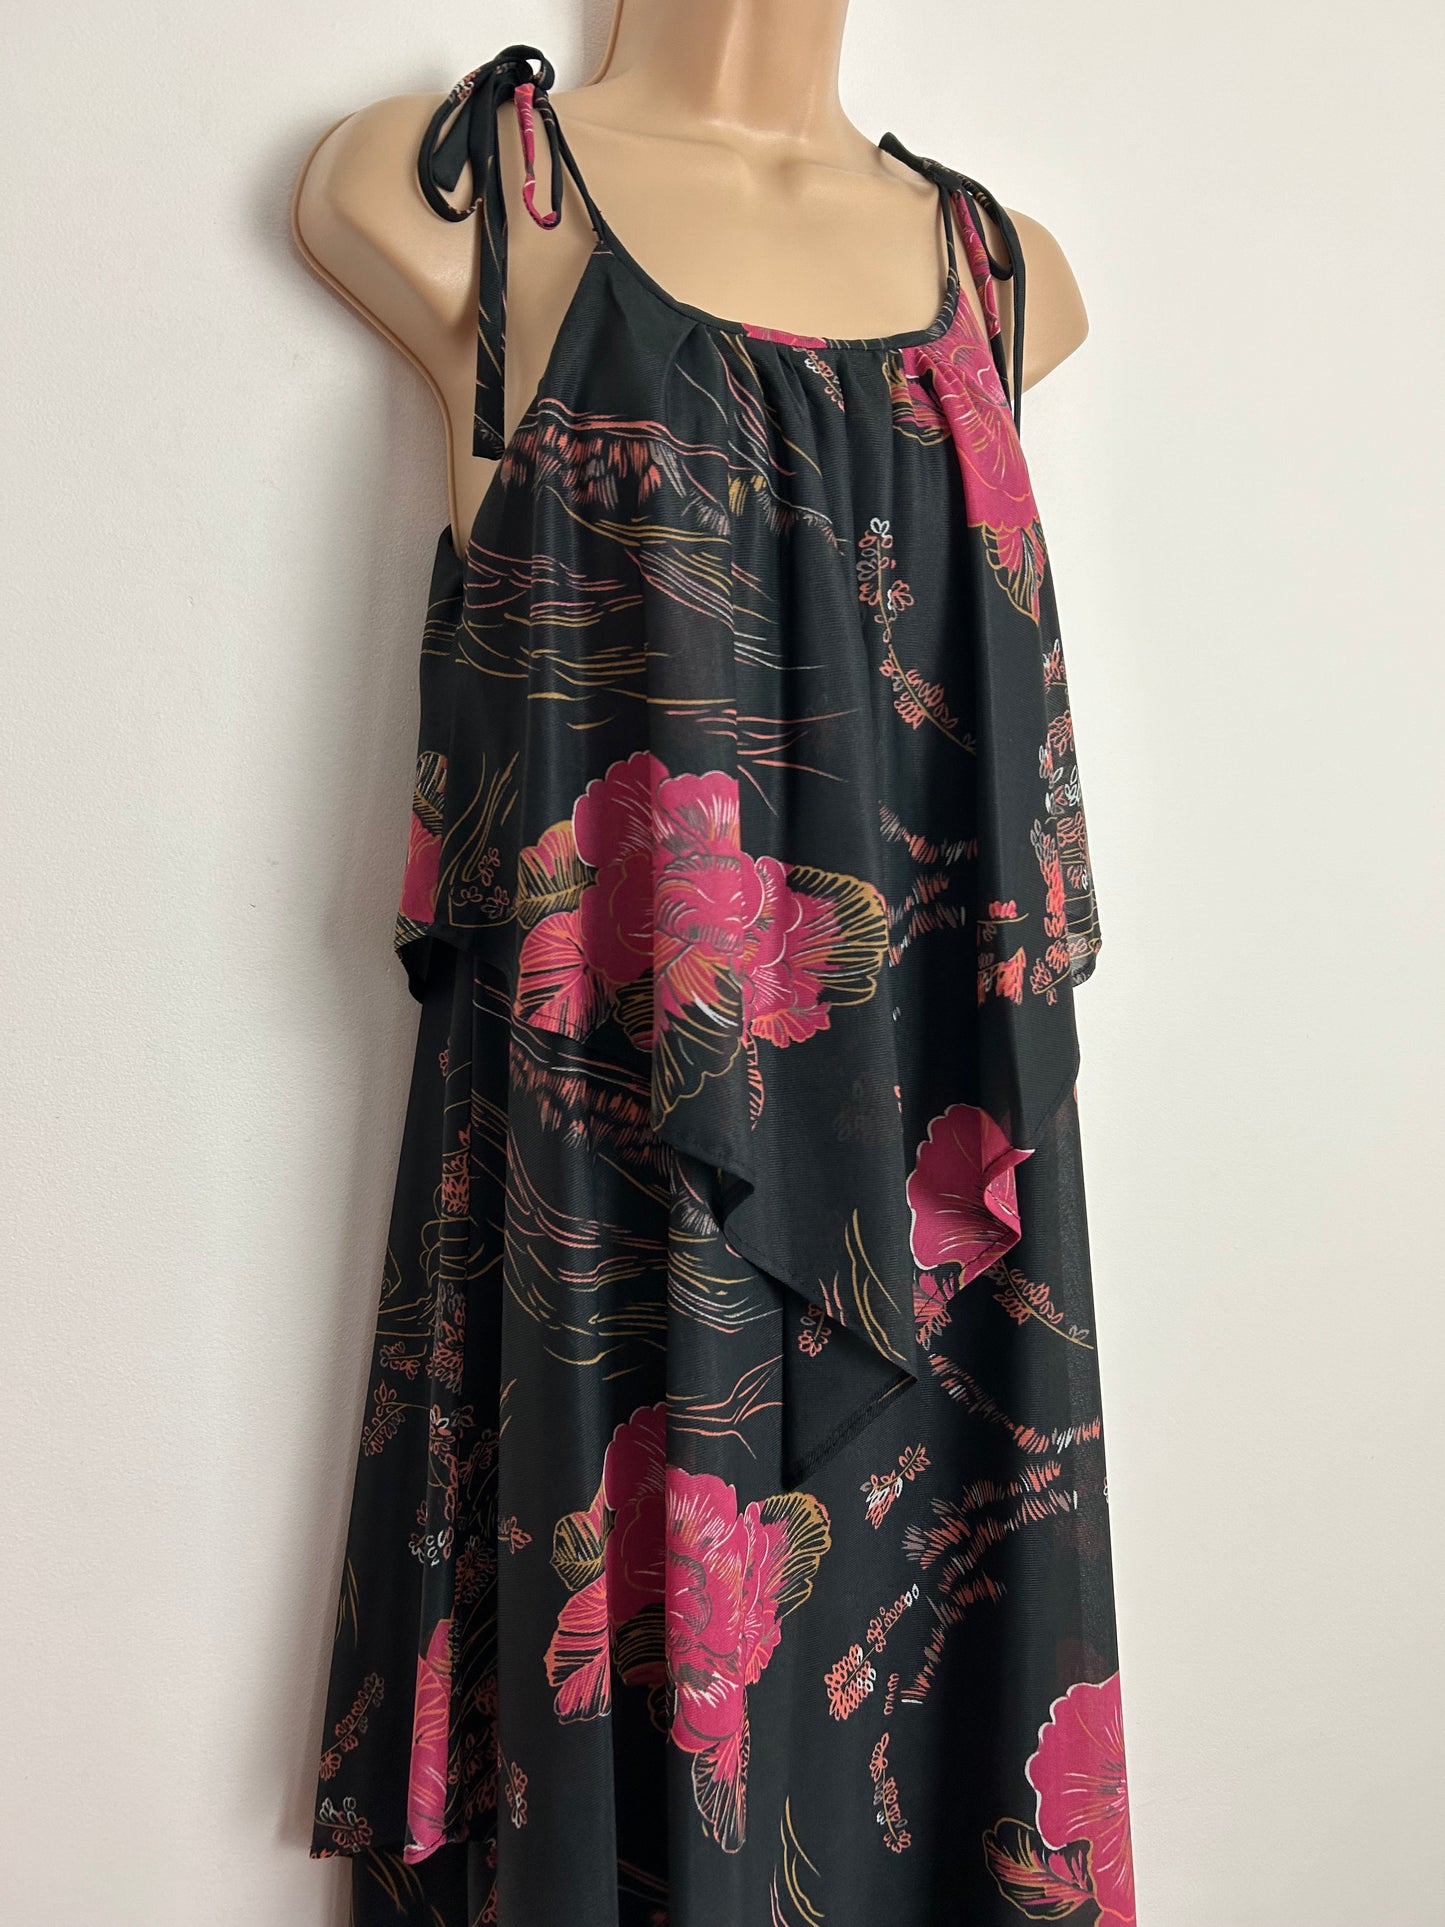 Vintage 1970s UK Size 8 Pretty Black & Pink Floral Print Tie Shoulder Triple Layered Boho Summer Maxi Dress